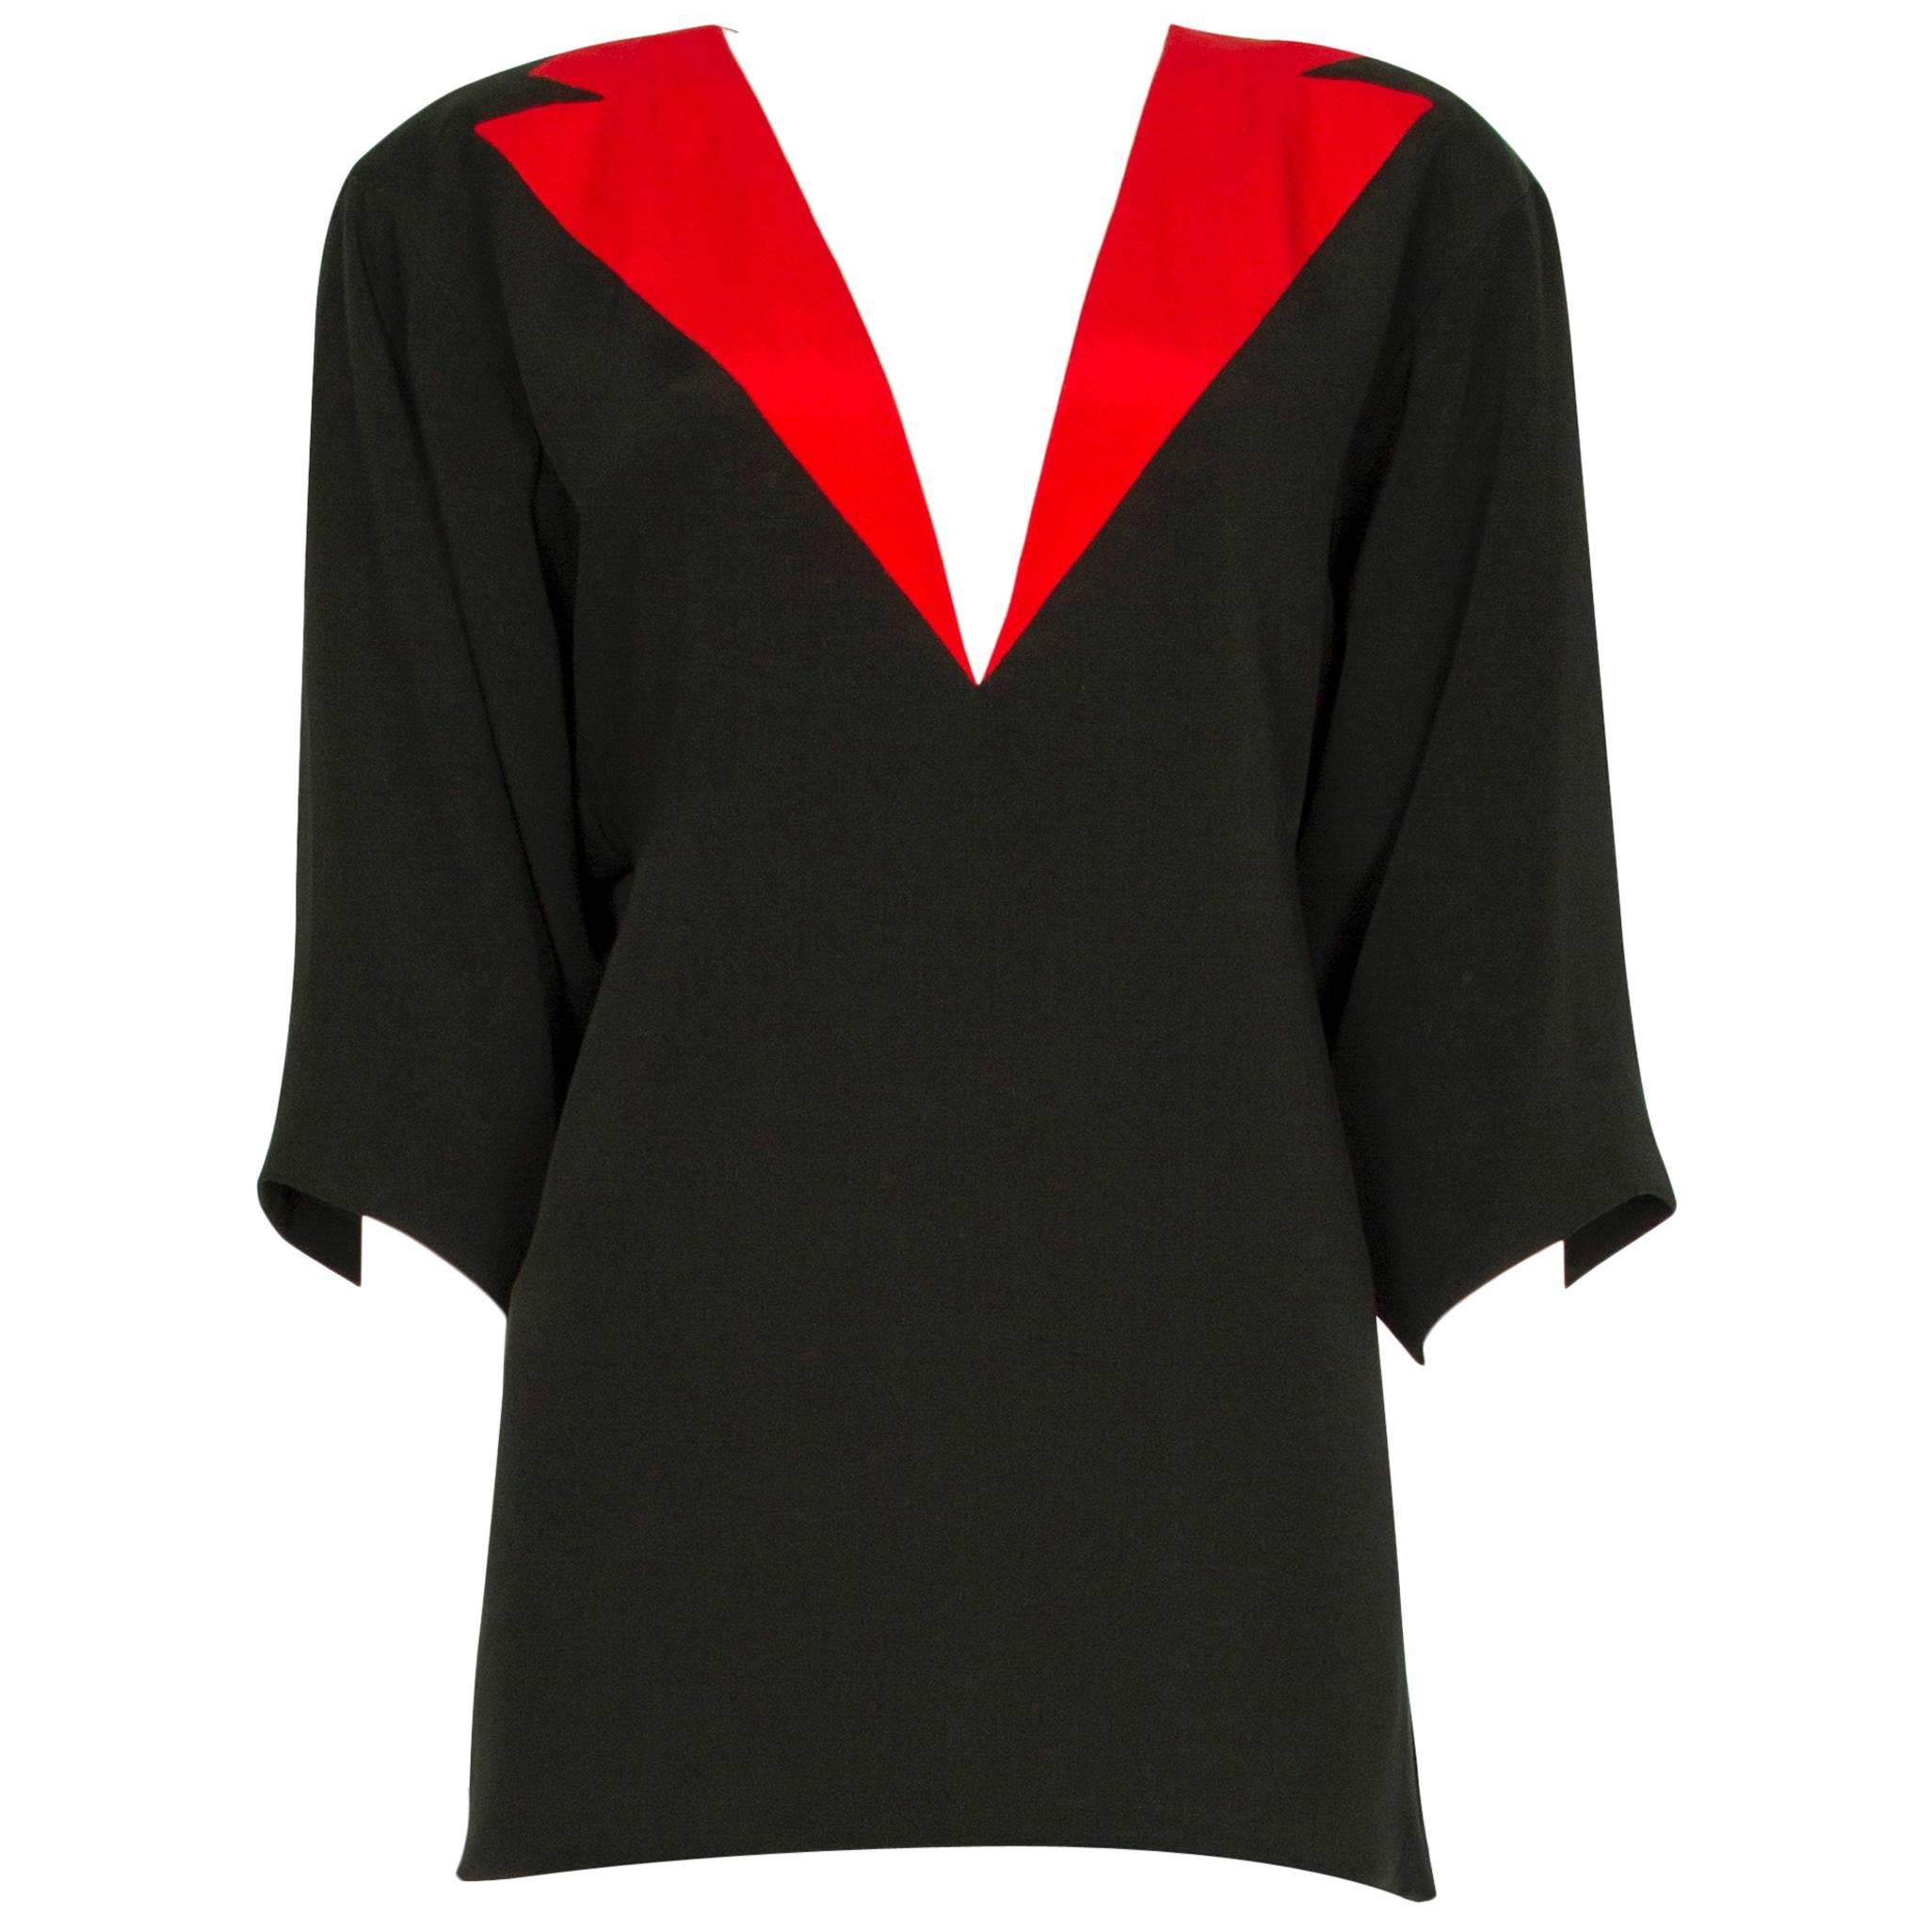 S/S 1983 Dior Couture Black Red & Ivory Silk Trompe L'Oeil Boxy Tunic For Sale